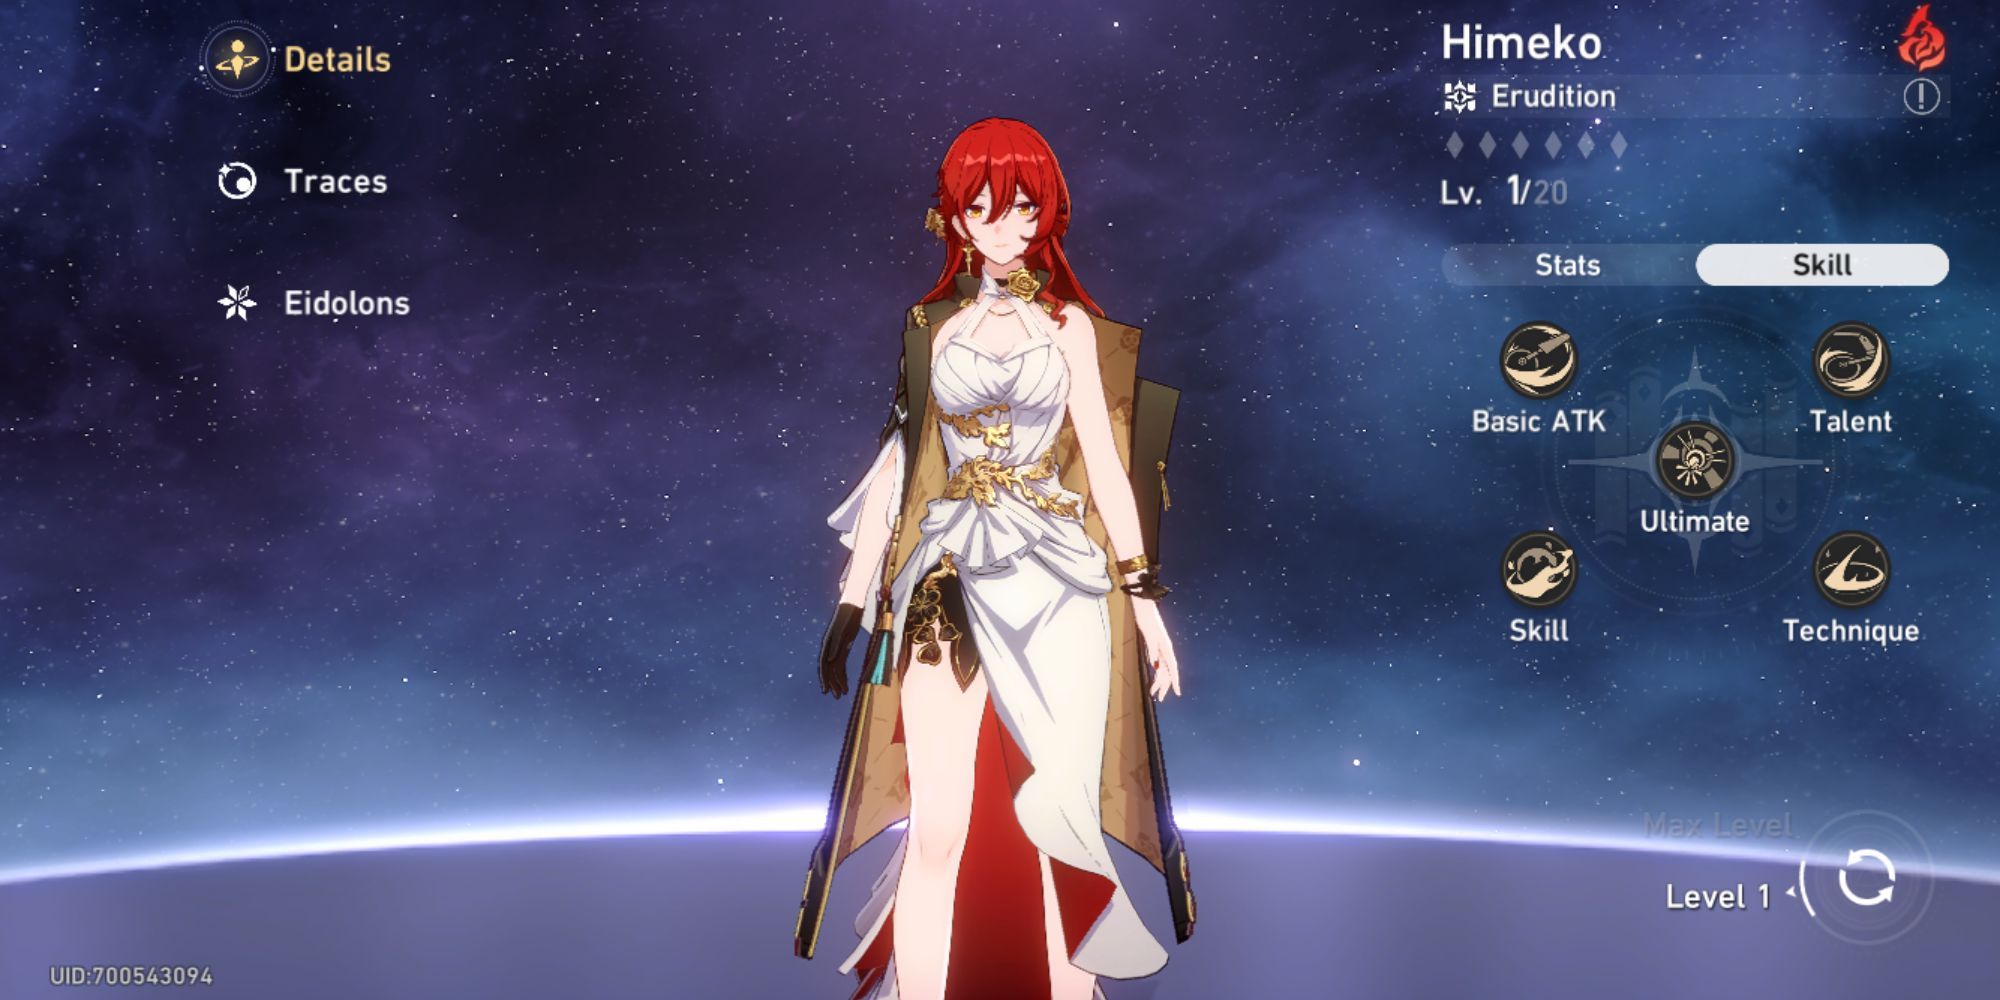 Honkai: Star Rail - Himeko in the preview character menu showing her abilities